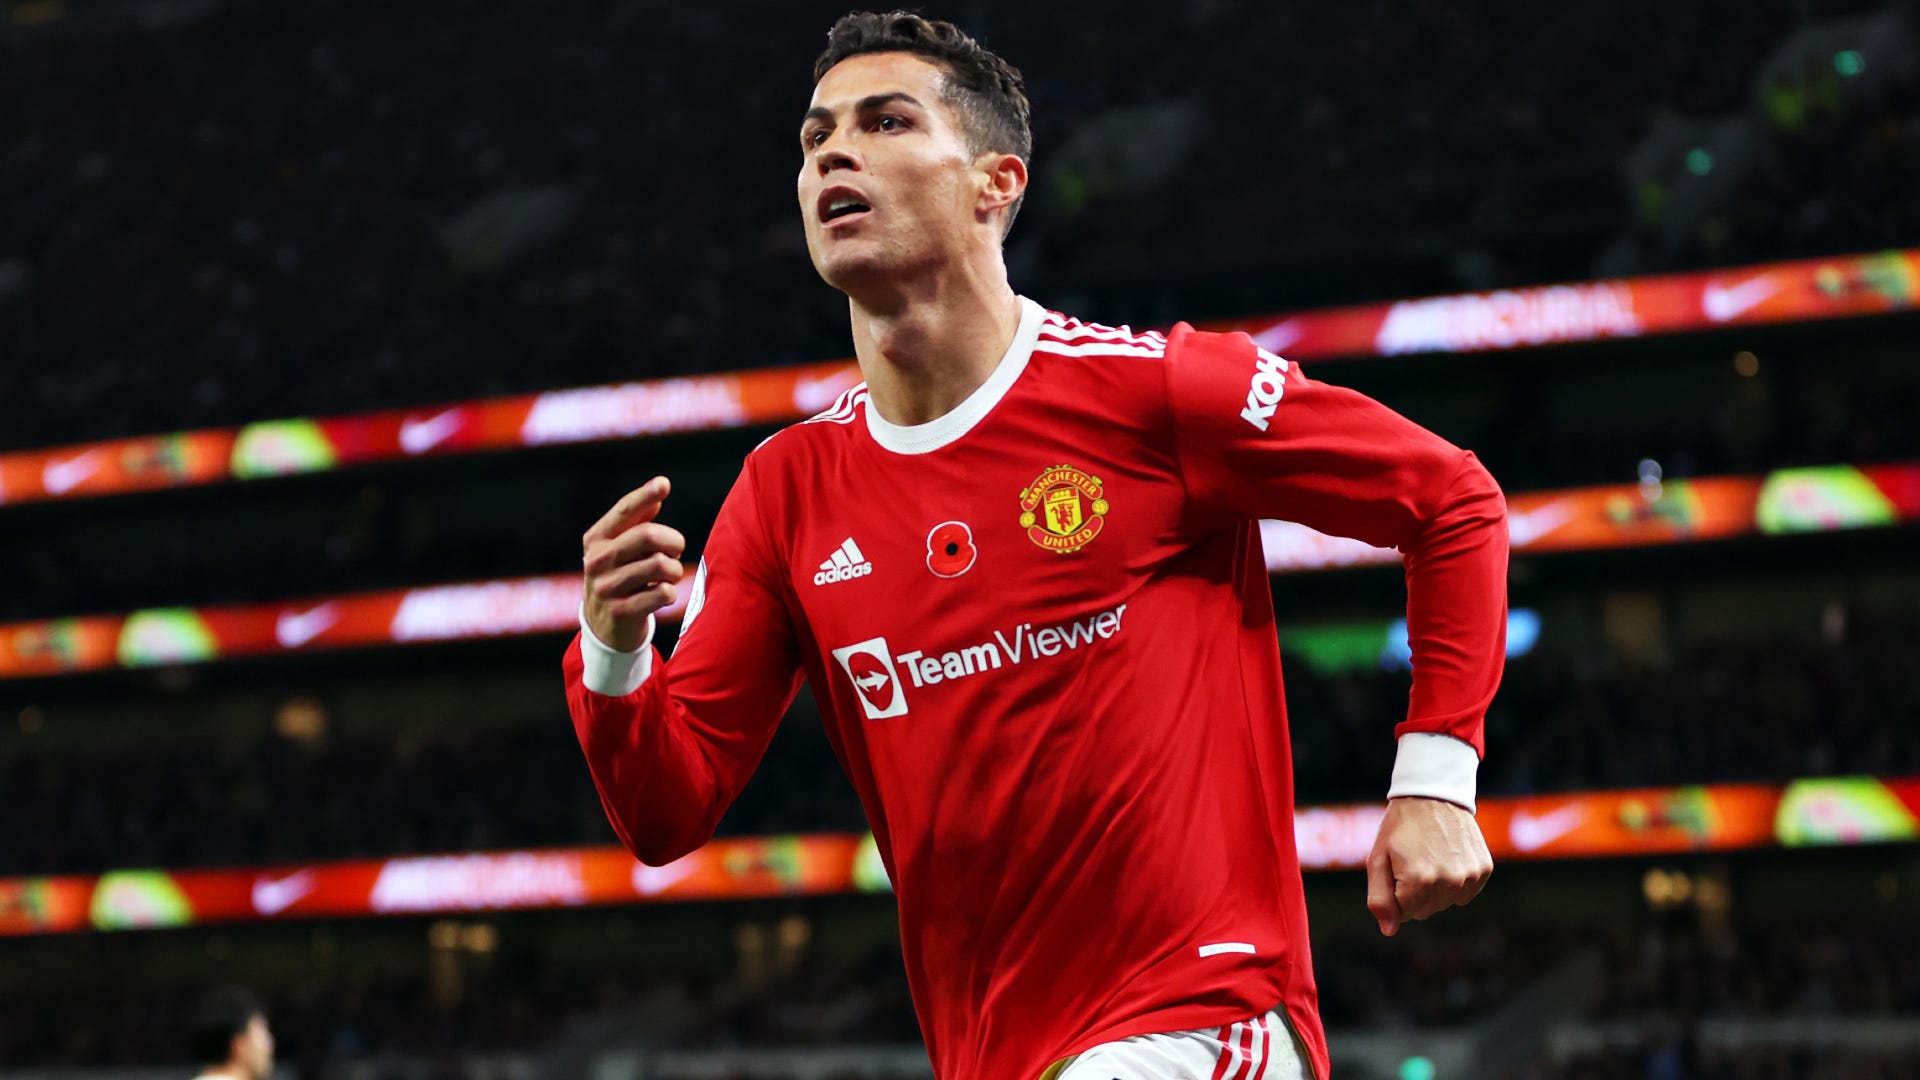 How many goals has Cristiano Ronaldo scored during his career